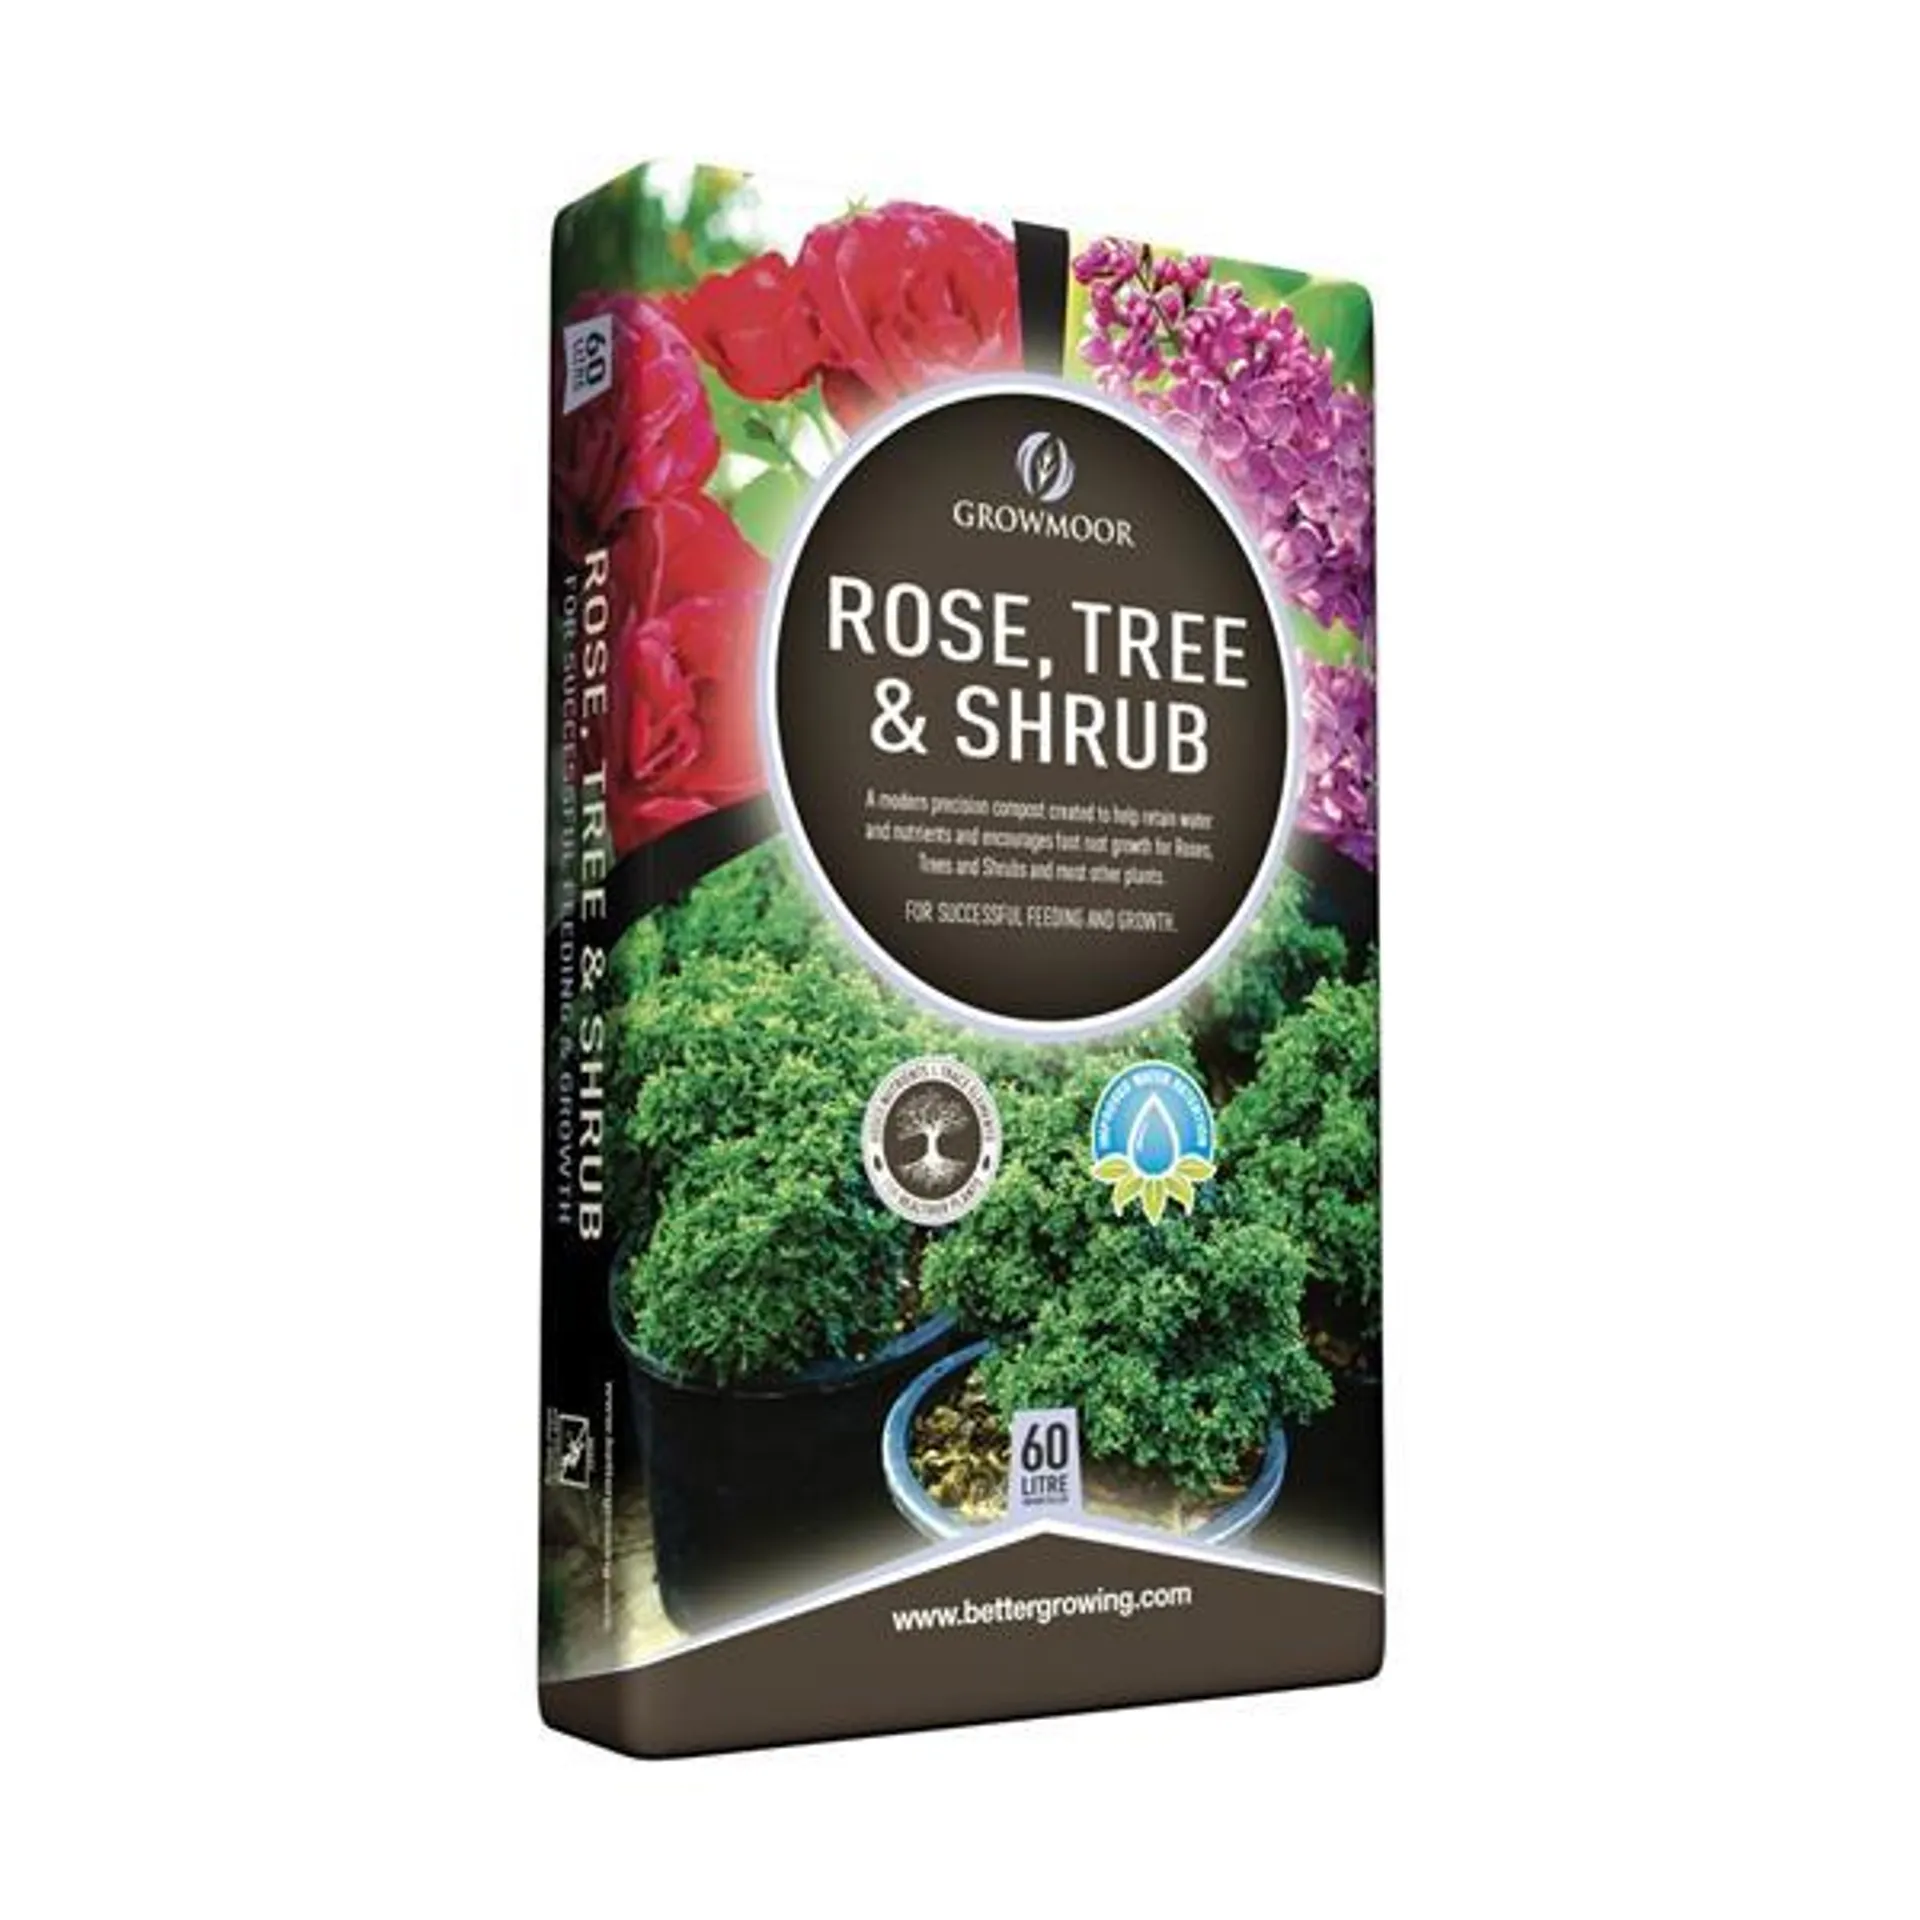 Rose, Tree & Shrub Compost - 60L